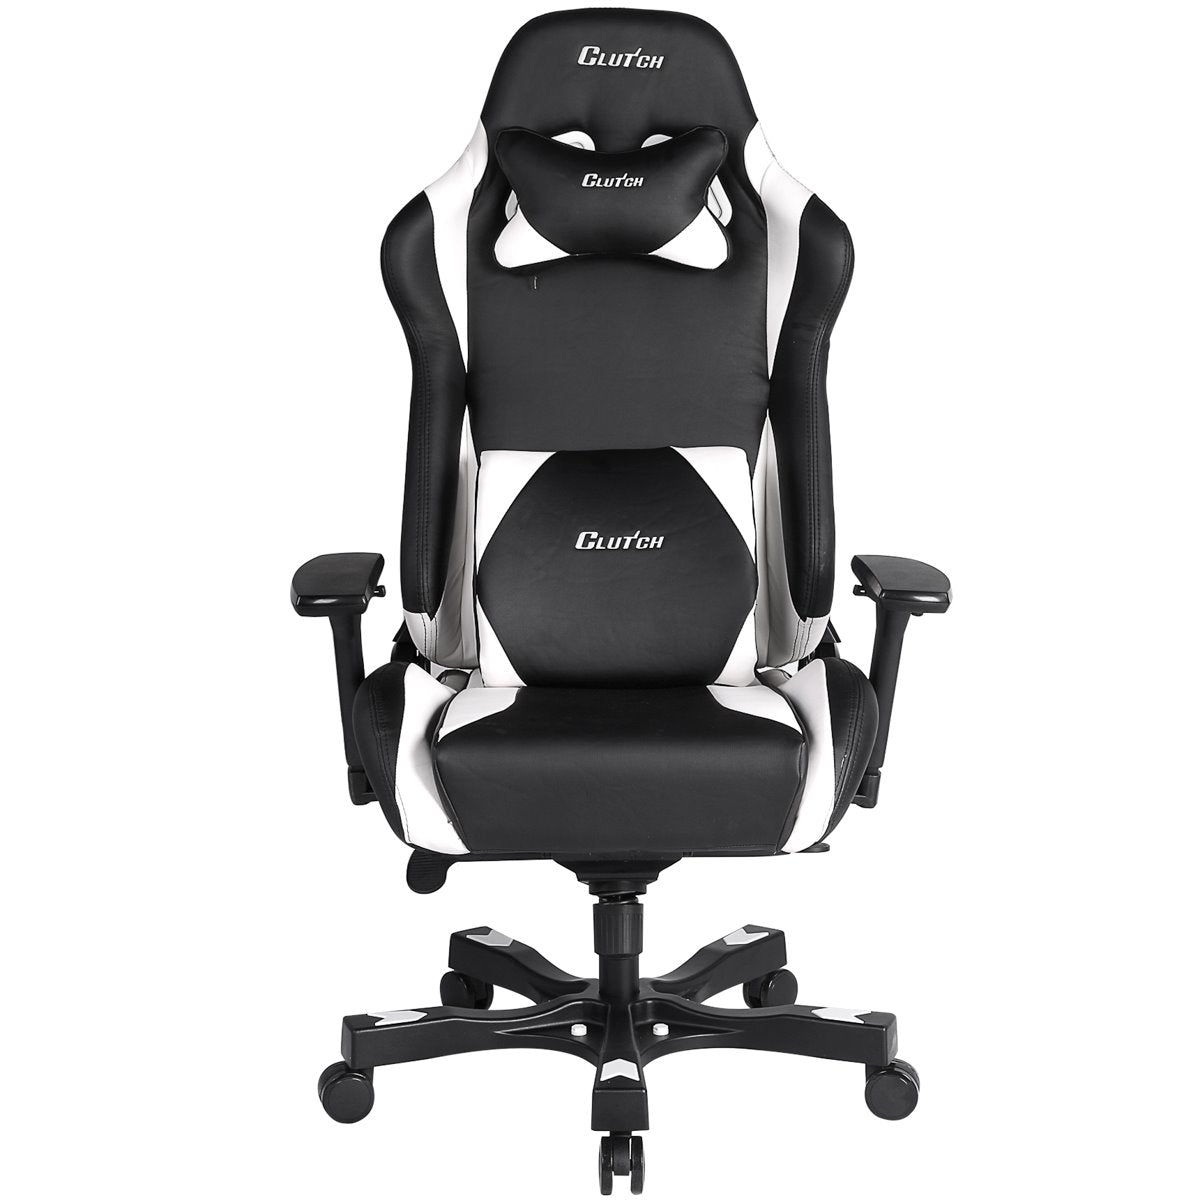 Throttle Series - Alpha (Large-XL) Gaming Chair Clutch Chairz 